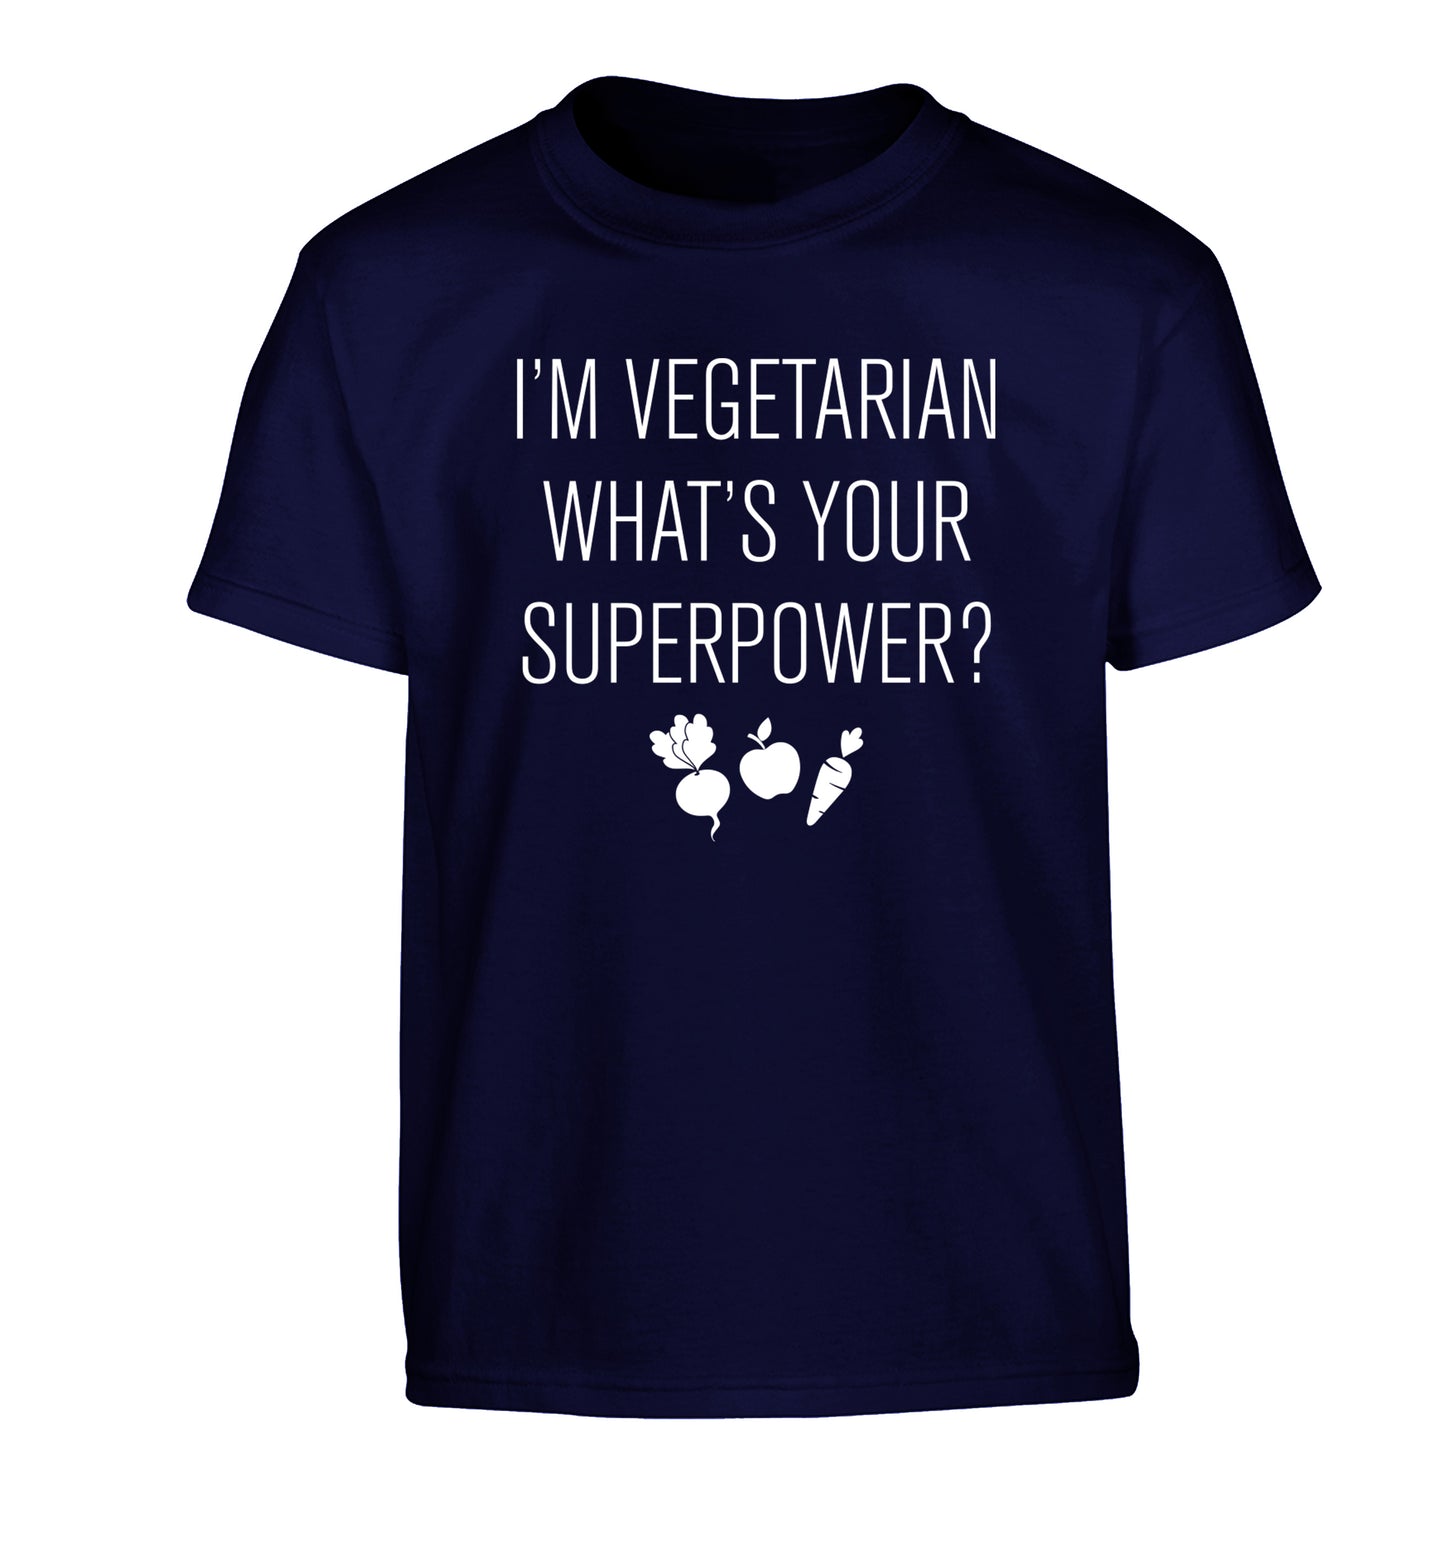 I'm vegetarian what's your superpower? Children's navy Tshirt 12-13 Years